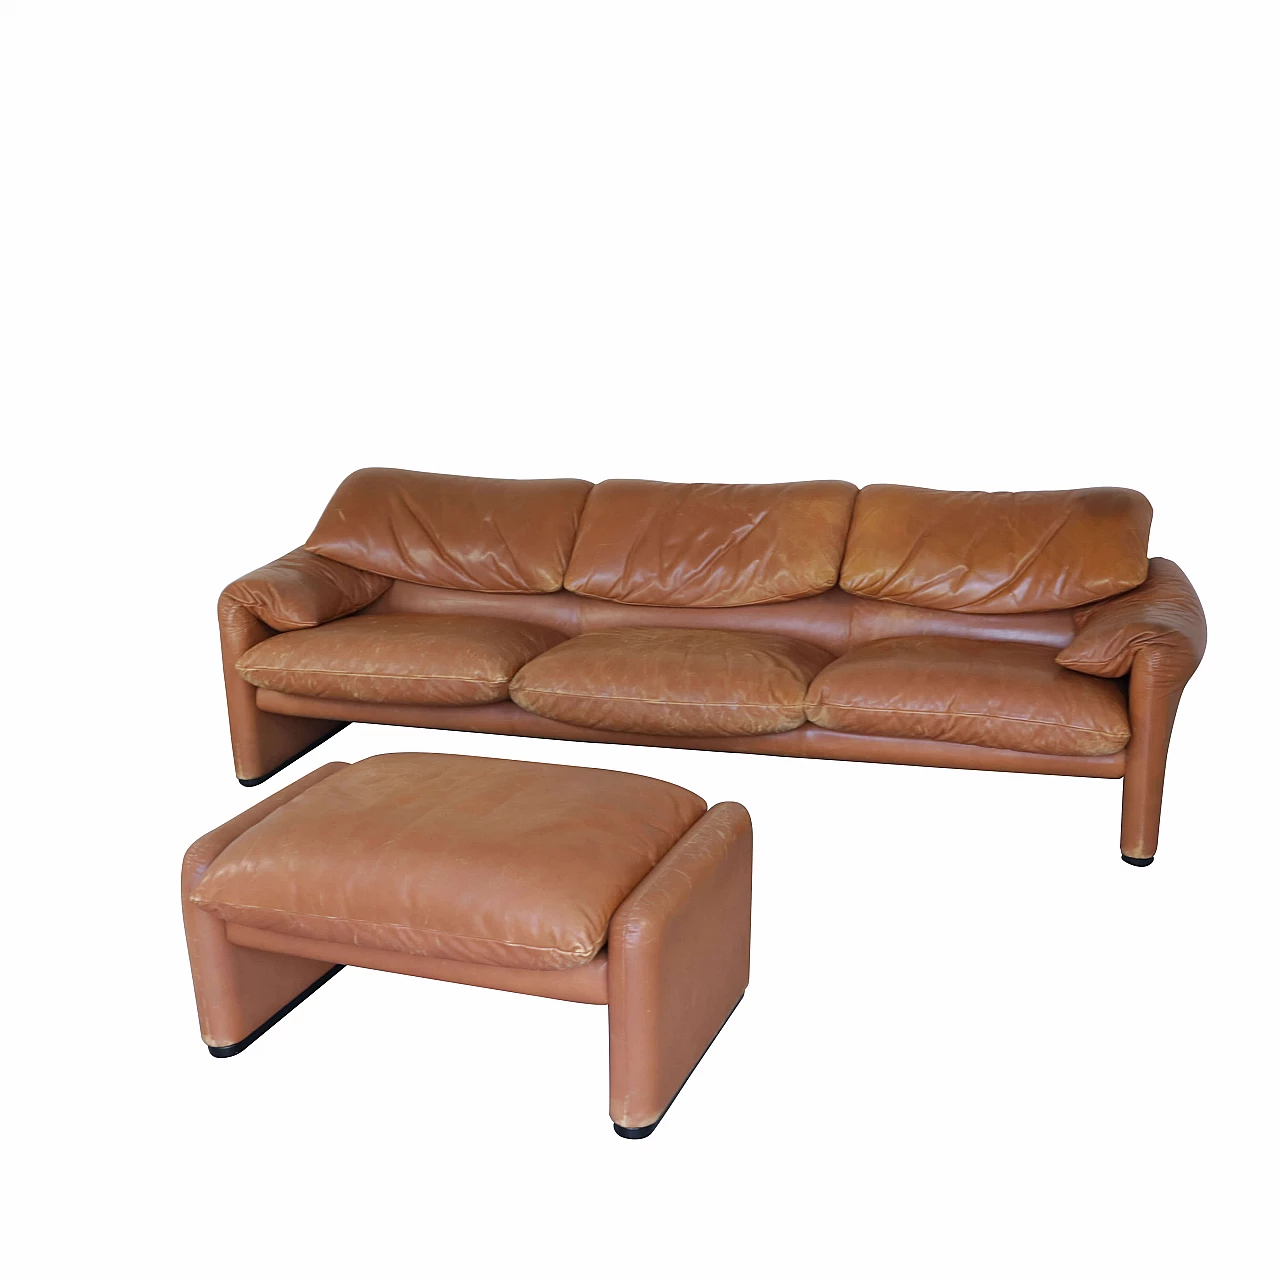 Maralunga sofa and leather footstool by Vico Magistretti for Cassina, 60s 1266415